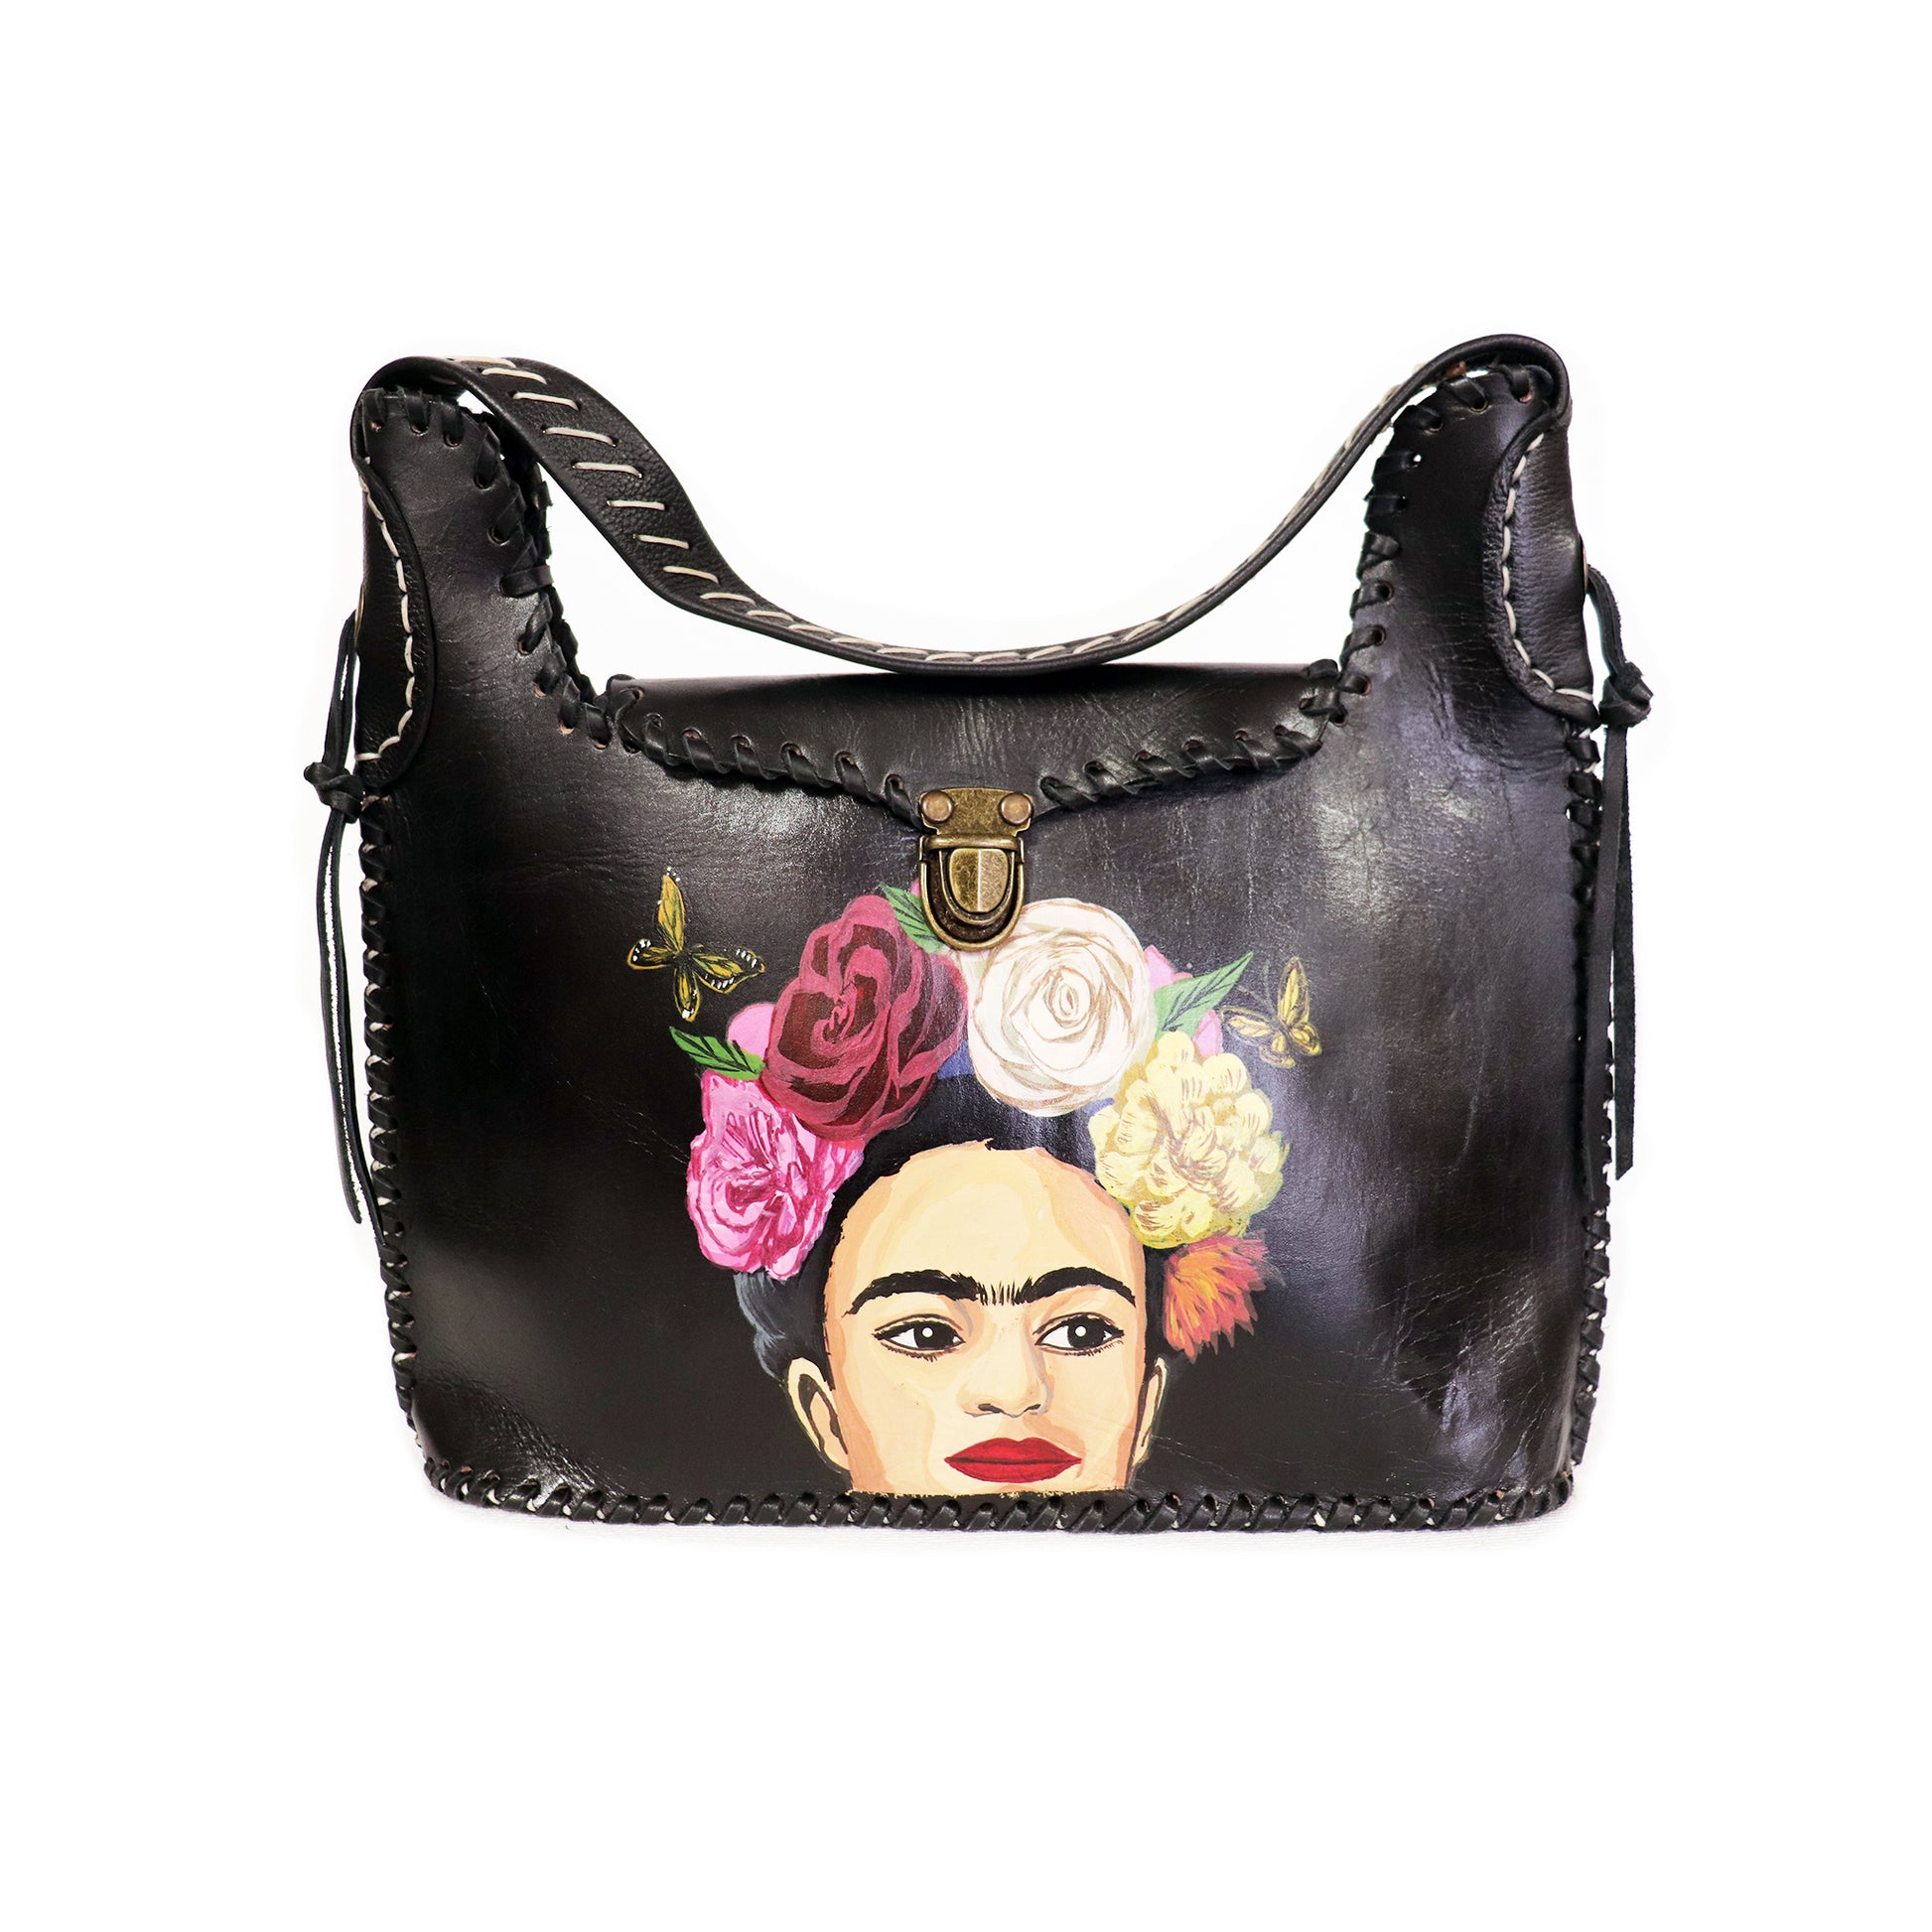 Frida Kahlo Bag on Mercari | Beautiful handbags, Bags, Skull fashion